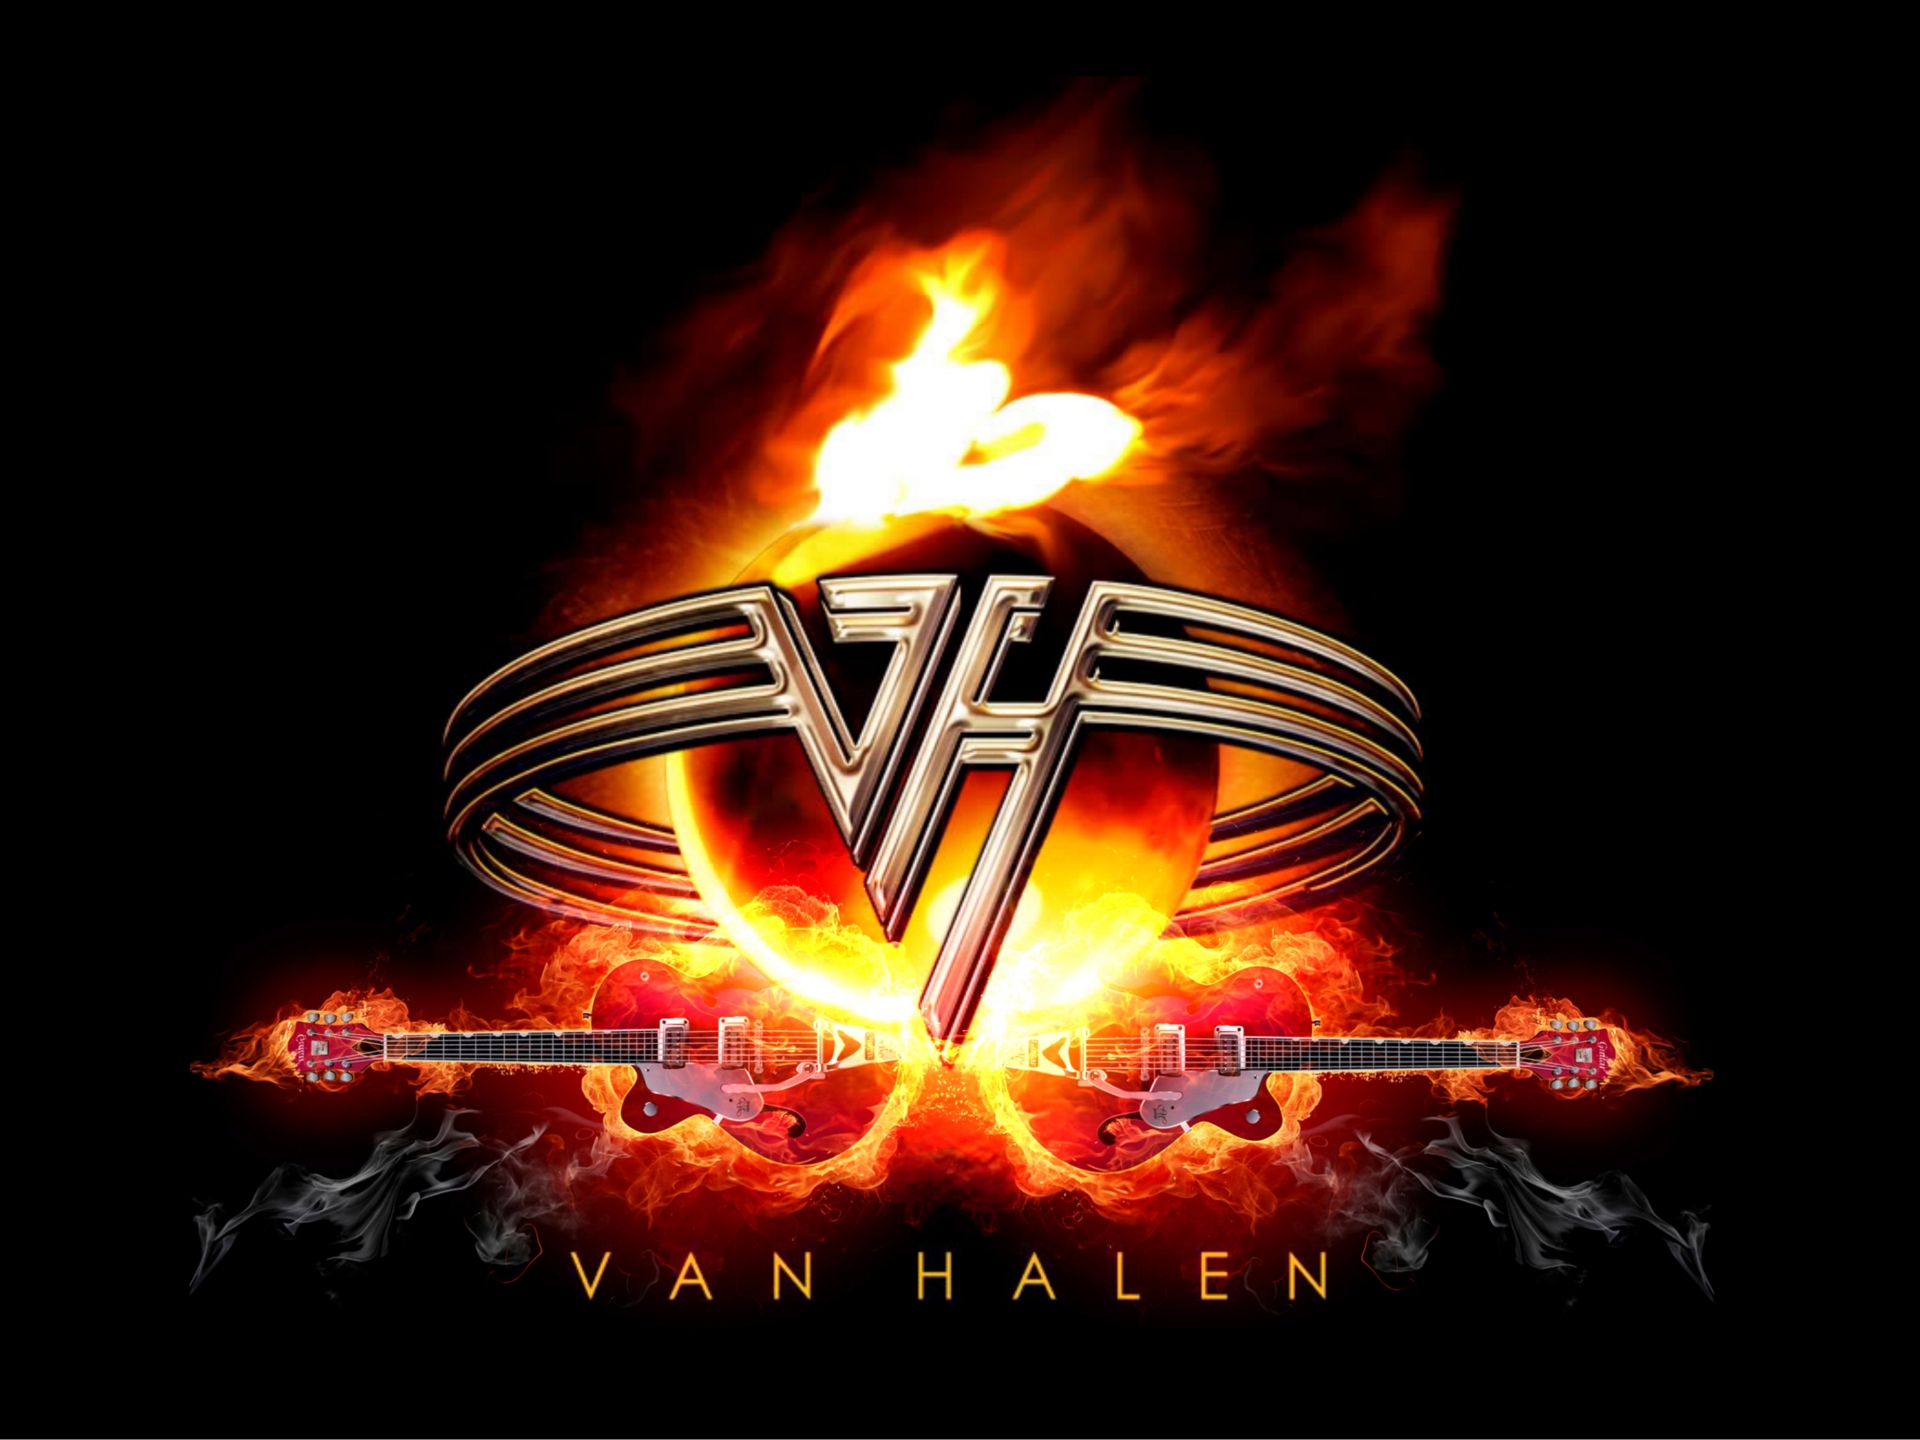 Van Halen Heavy Metal Hard Rock Bands Guitar E Wallpaper